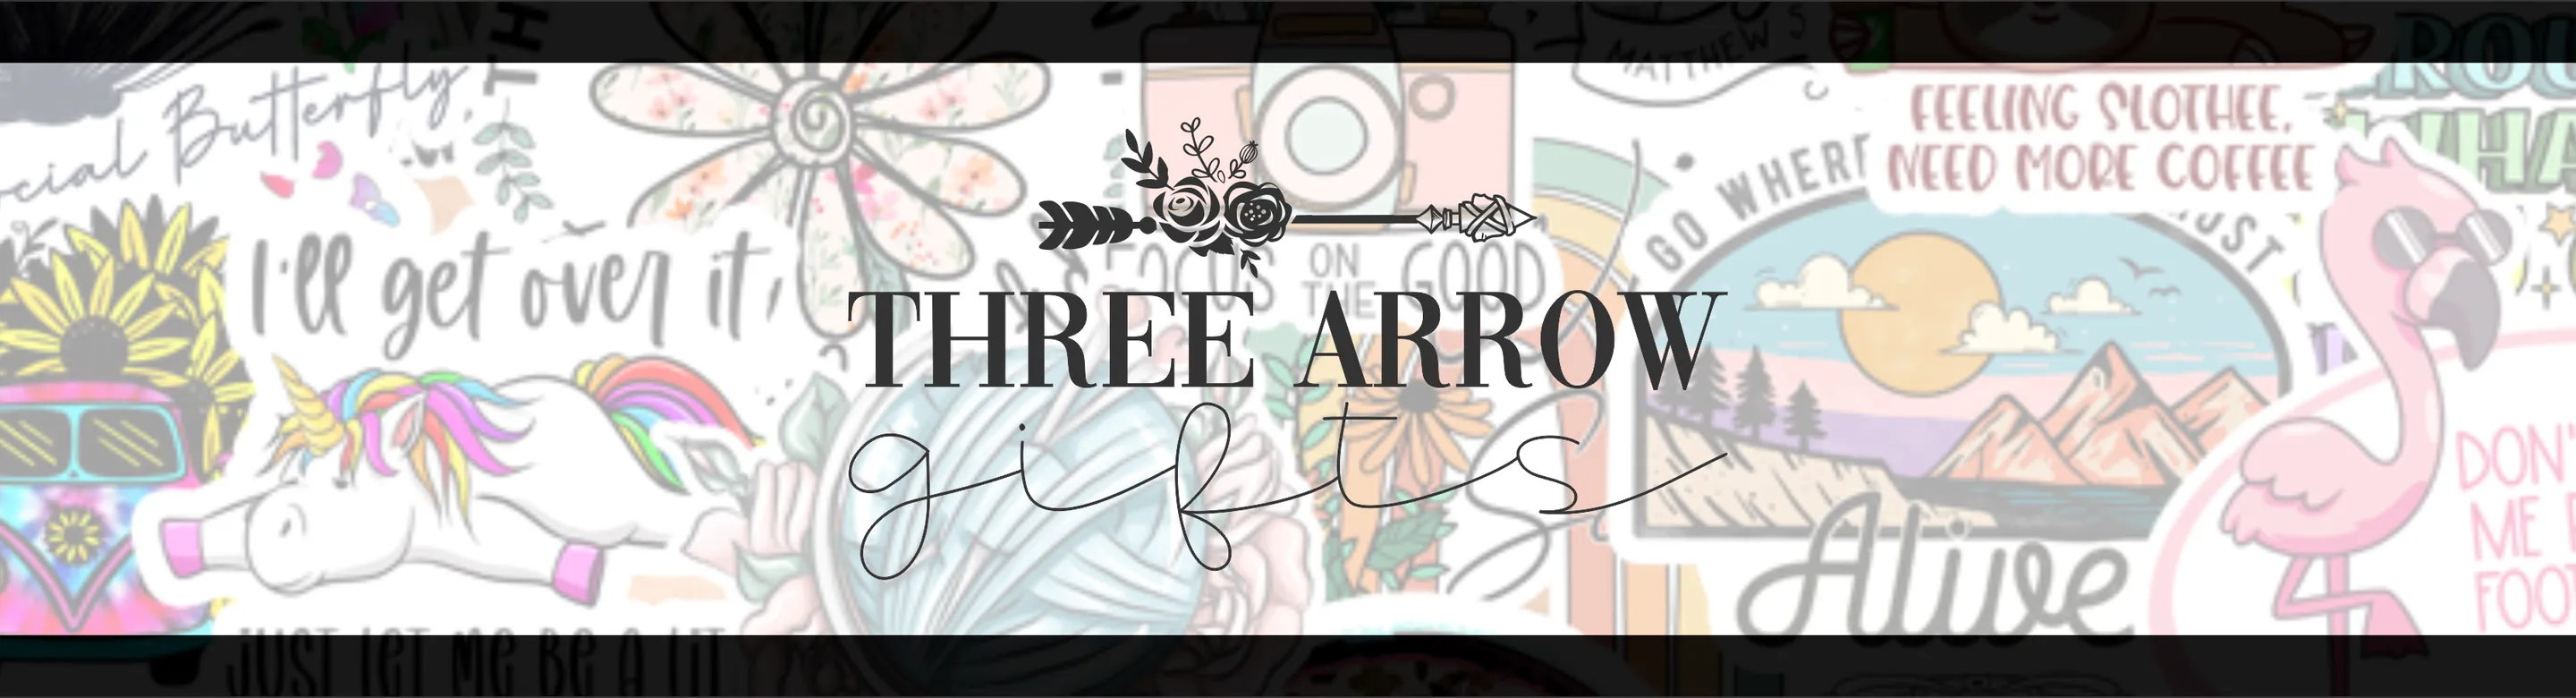 Three Arrow Gifts